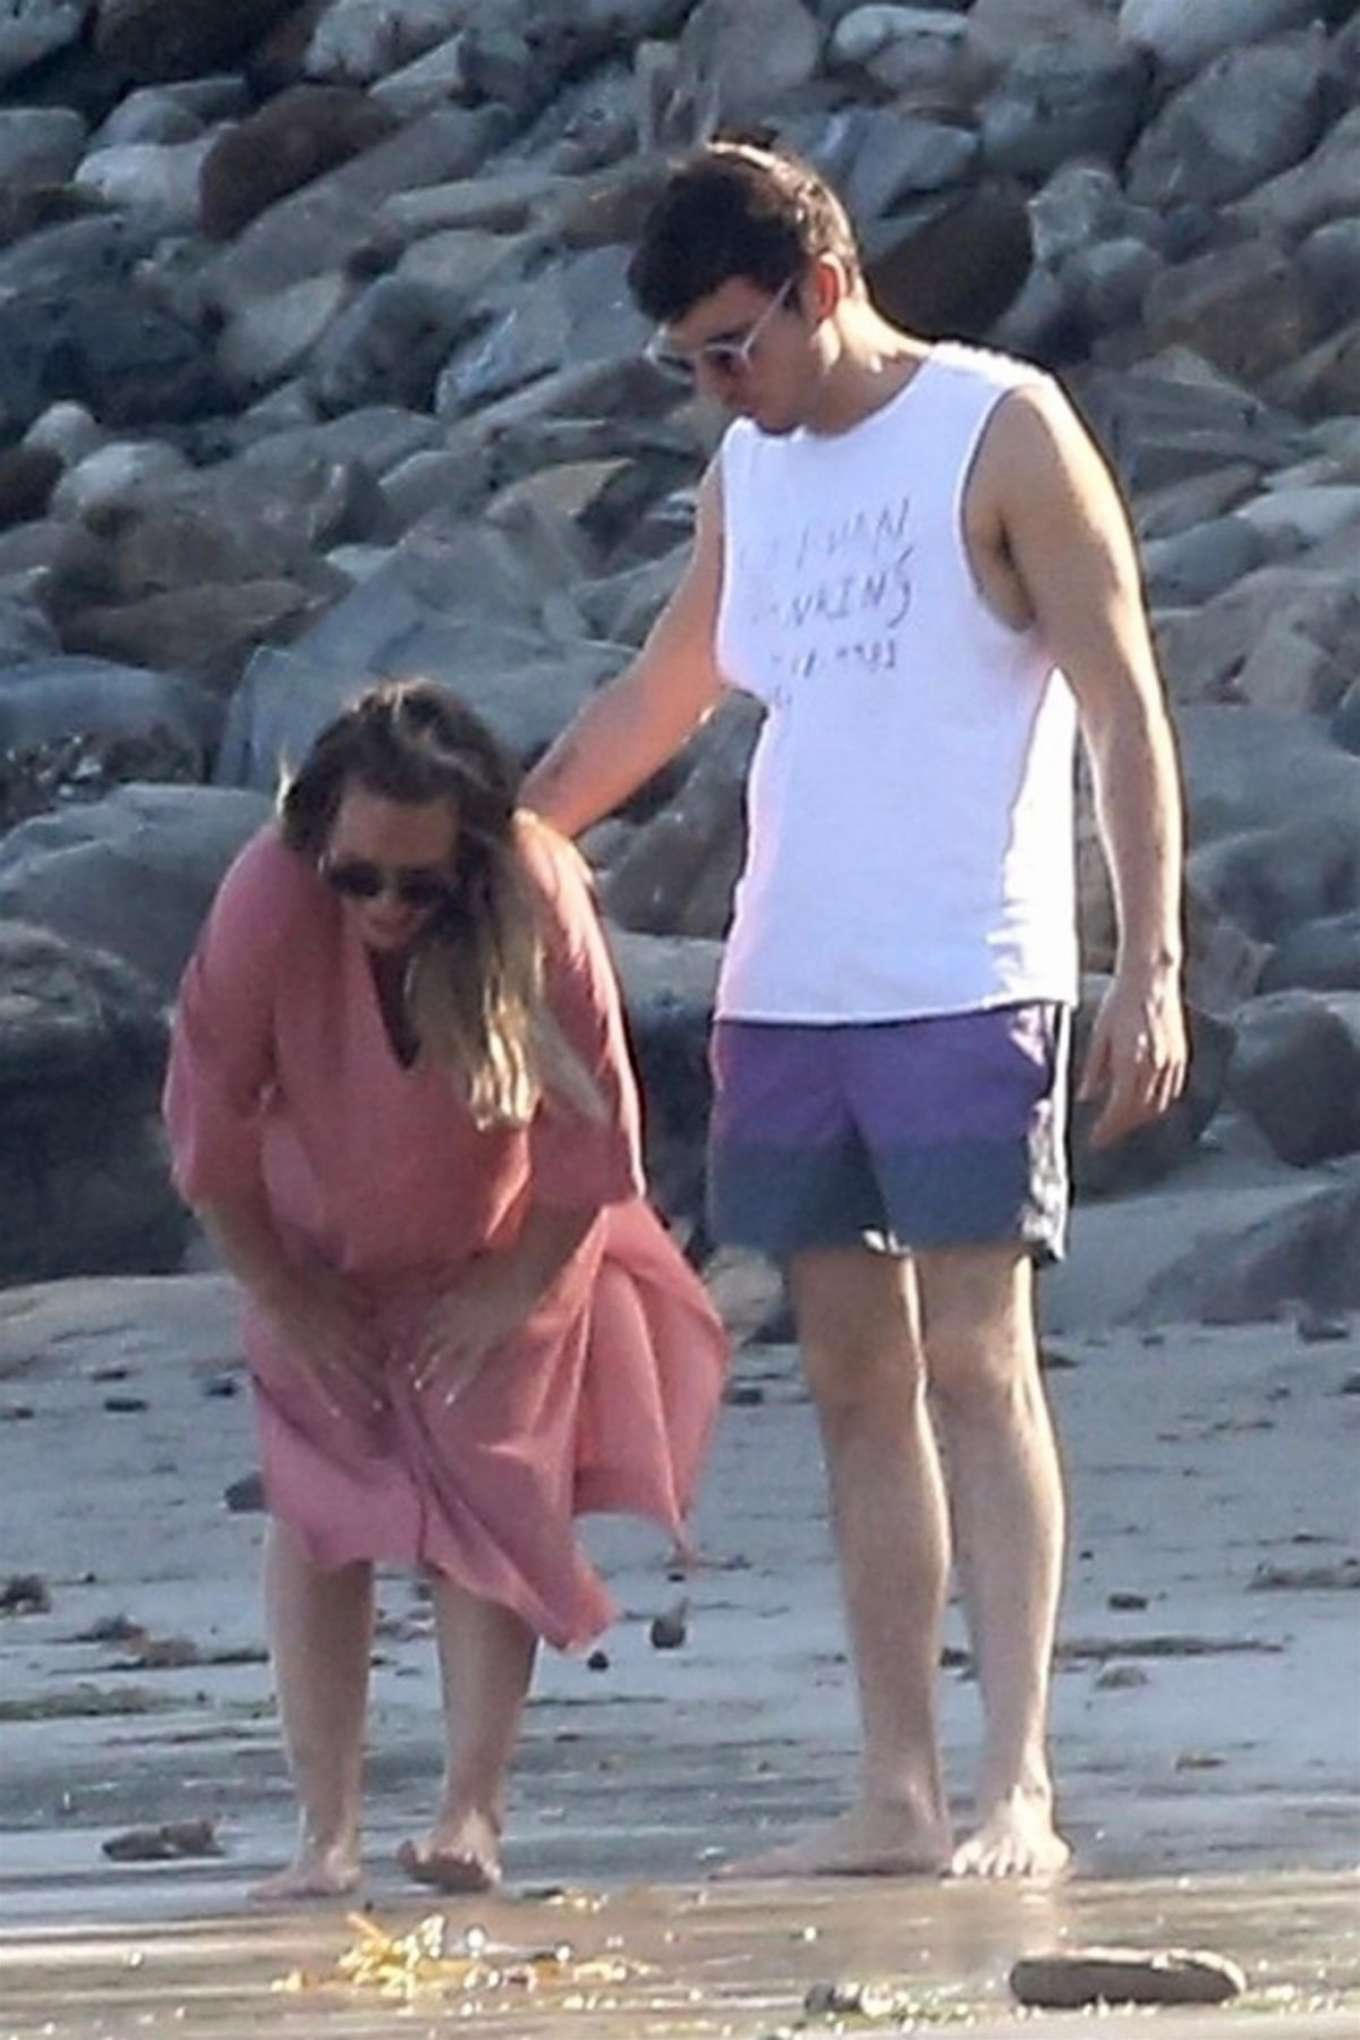 Hilary Duff in Bikini on the beach in Malibu